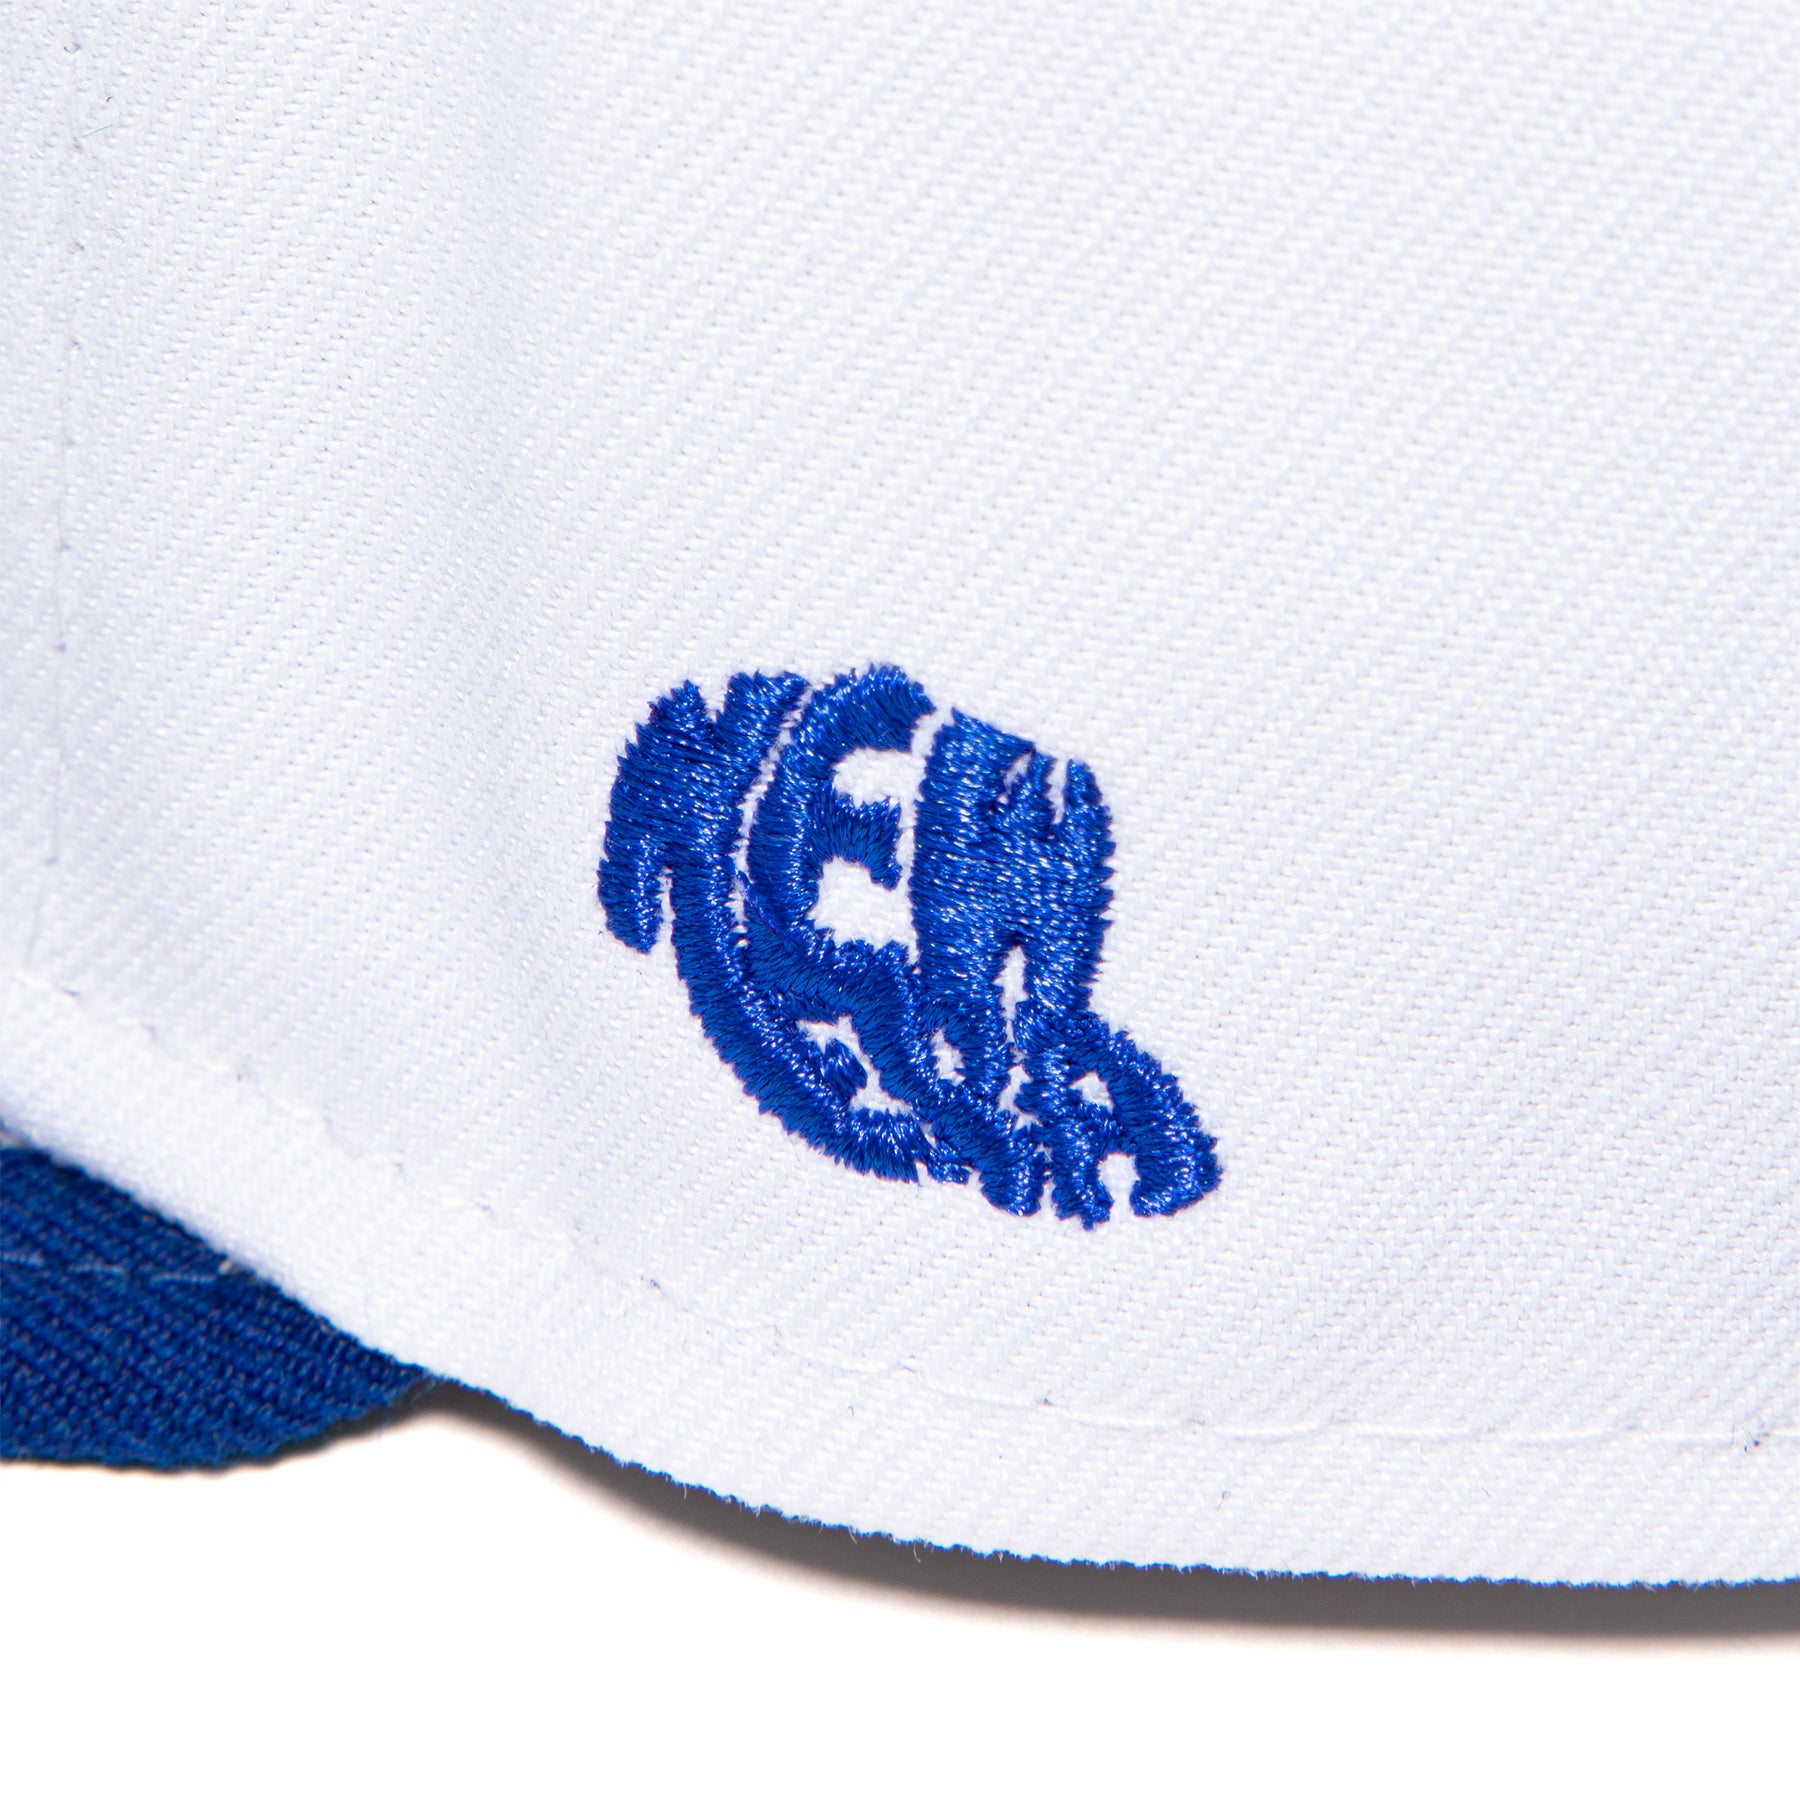 New Era Philadelphia Athletics 1929 Logo History 59FIFTY Fitted Hat 7 1/8 / White